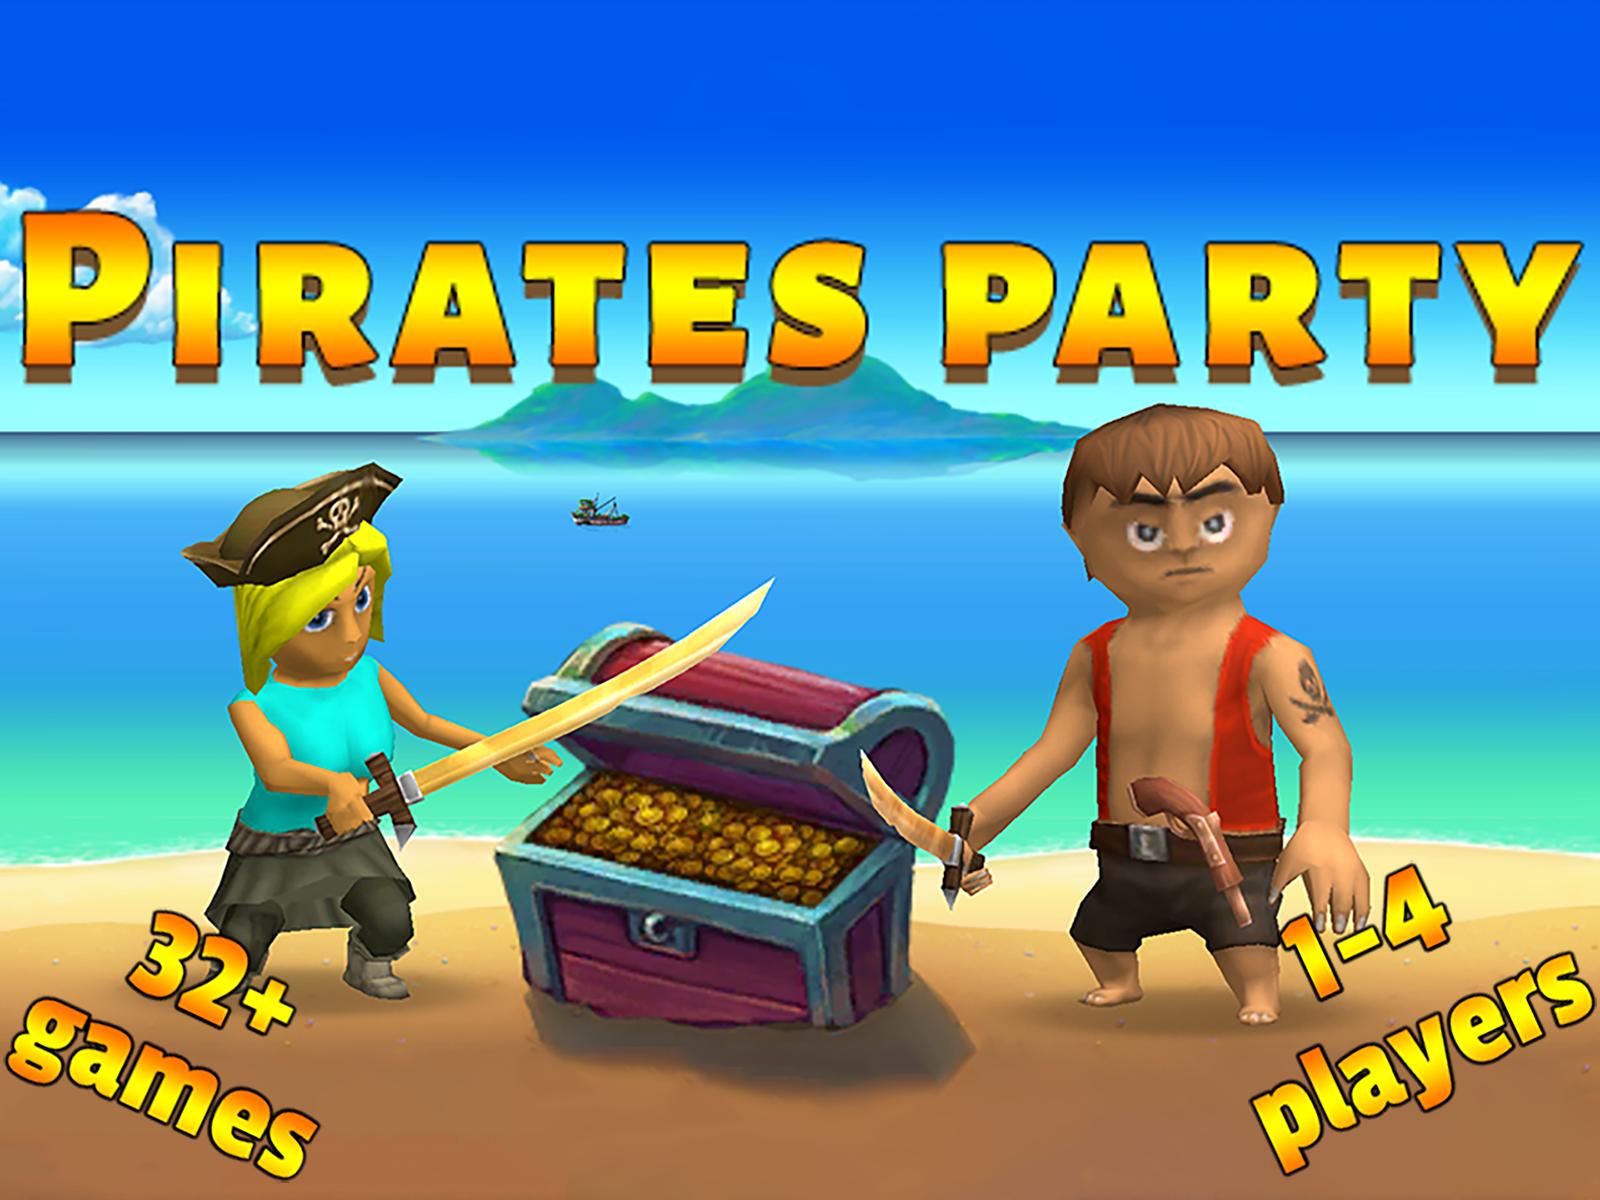 Pirates party: 2 3 4 players 2.17 Screenshot 9